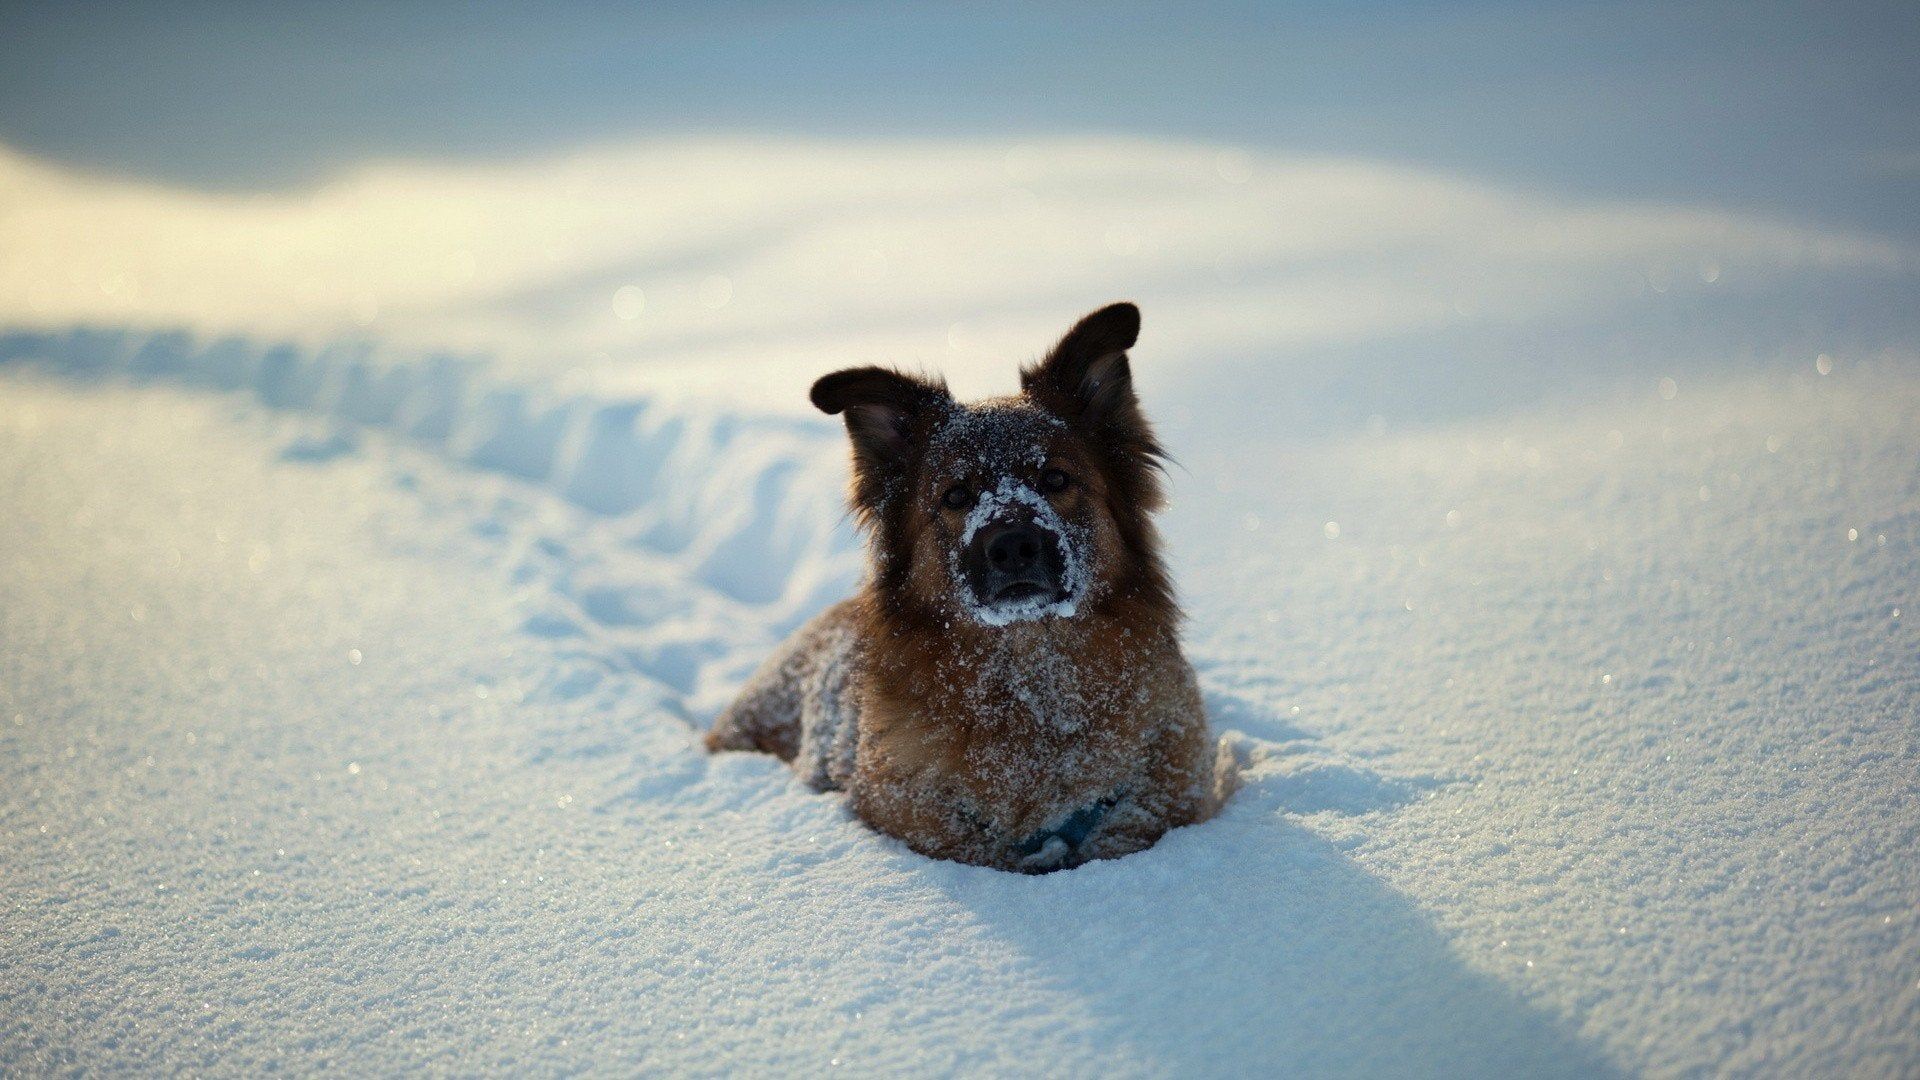 A dog in snow [1920x1080], wallpaperreddit.com